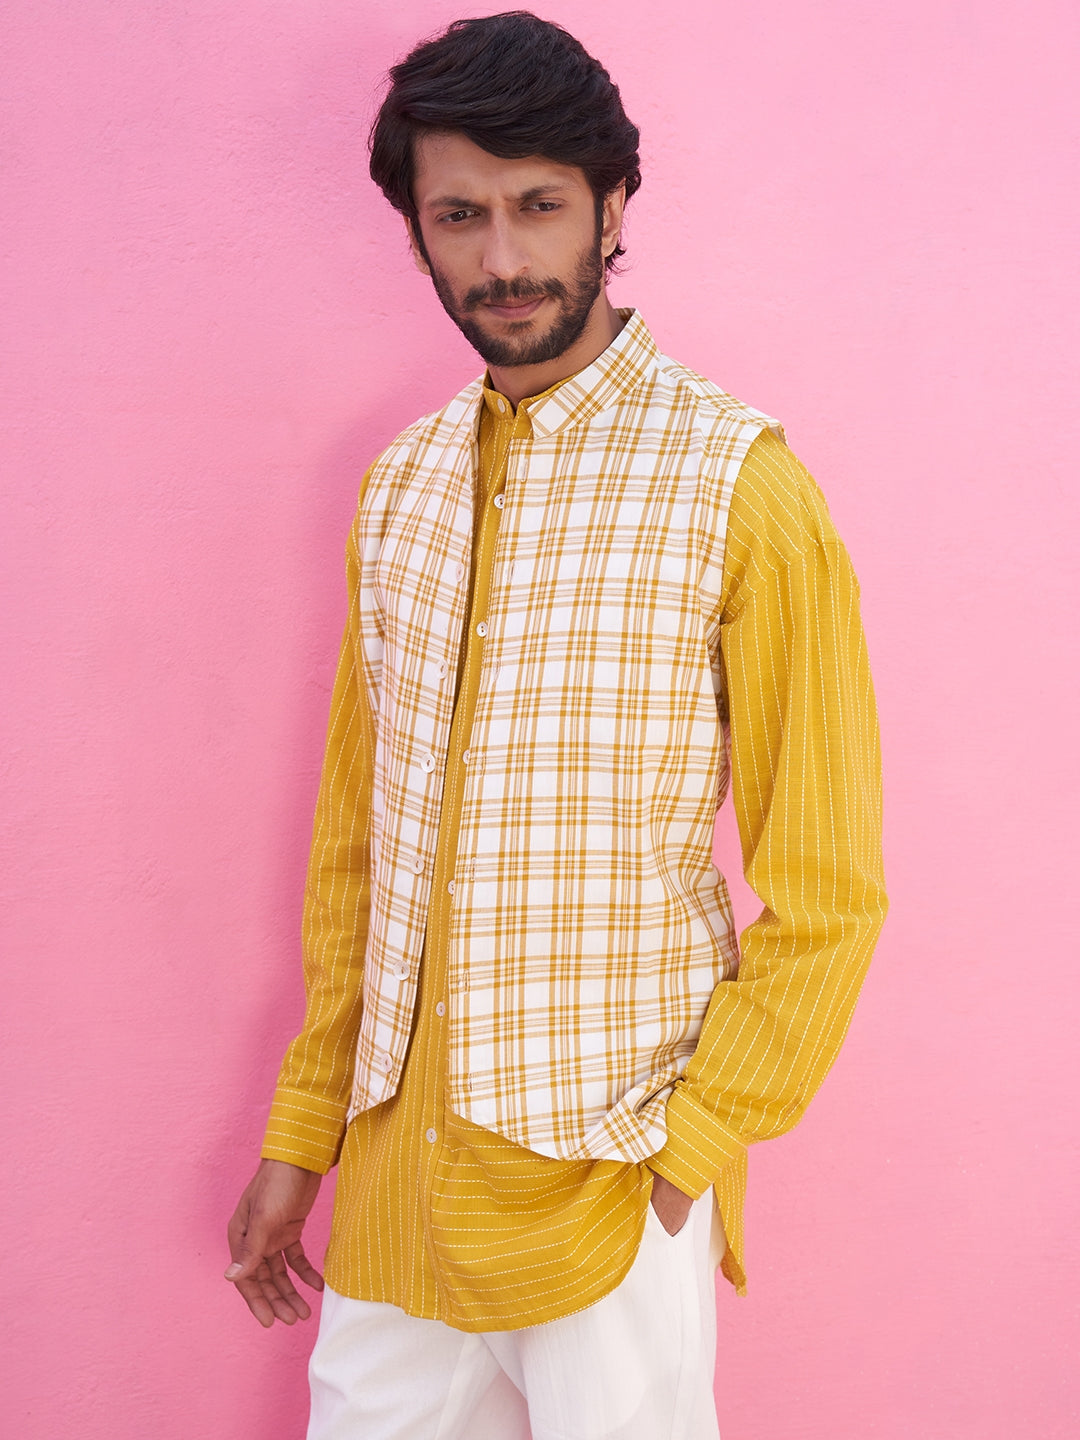 Mandarin collar yellow shirt kurta with plaid checks jacket